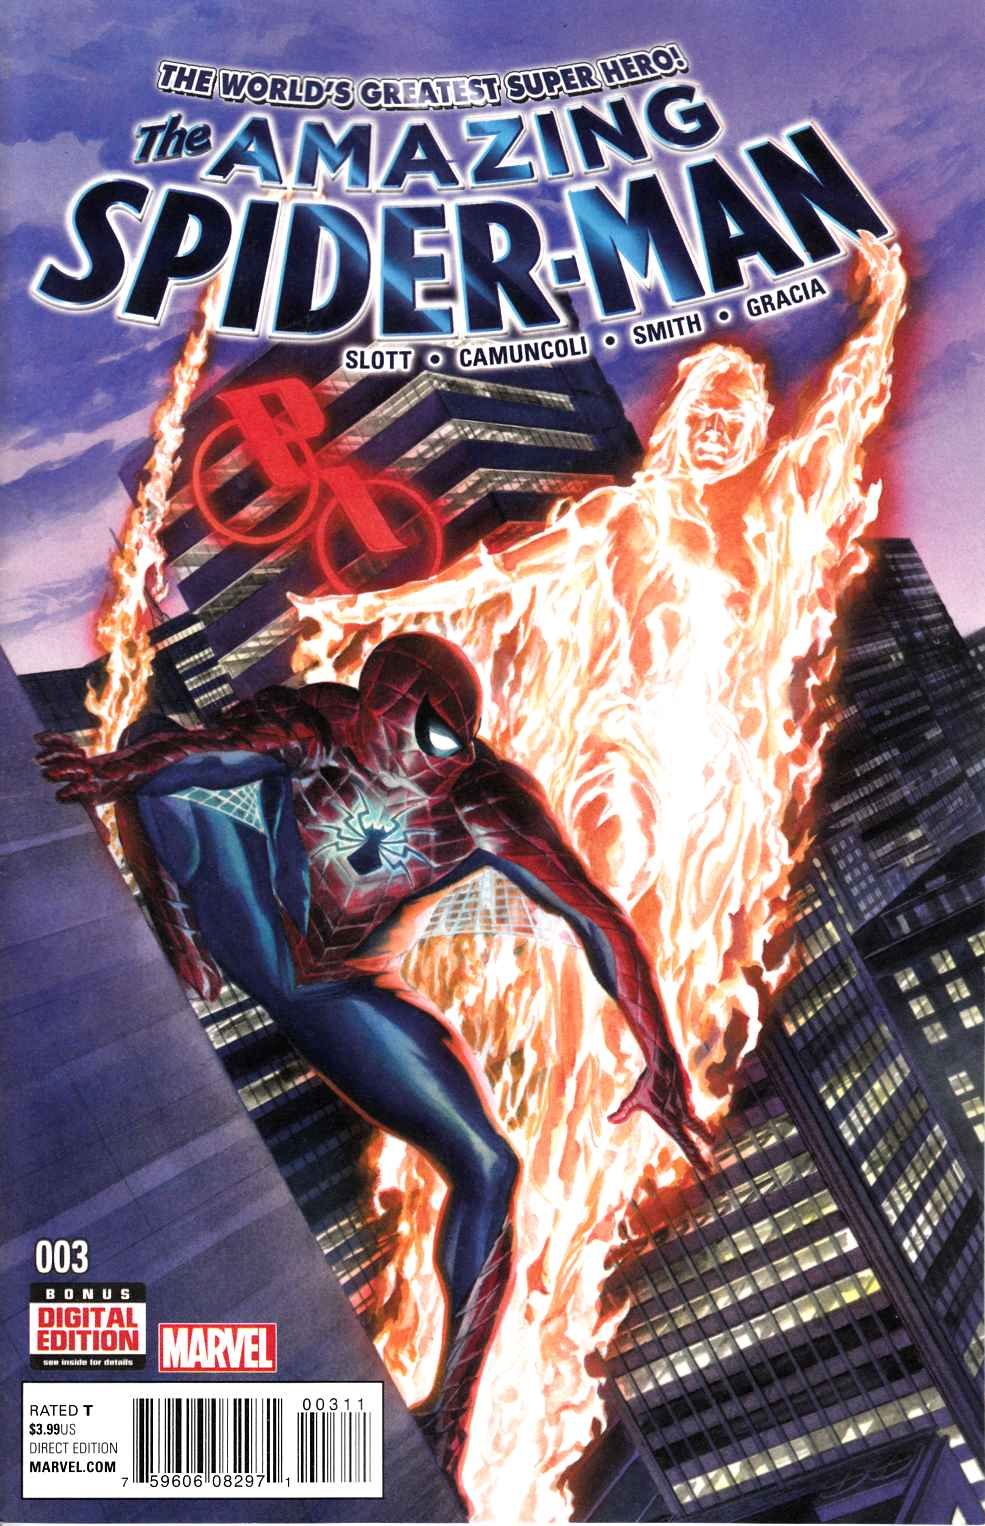 The Amazing Spider-Man illustrated by John Romita Sr.